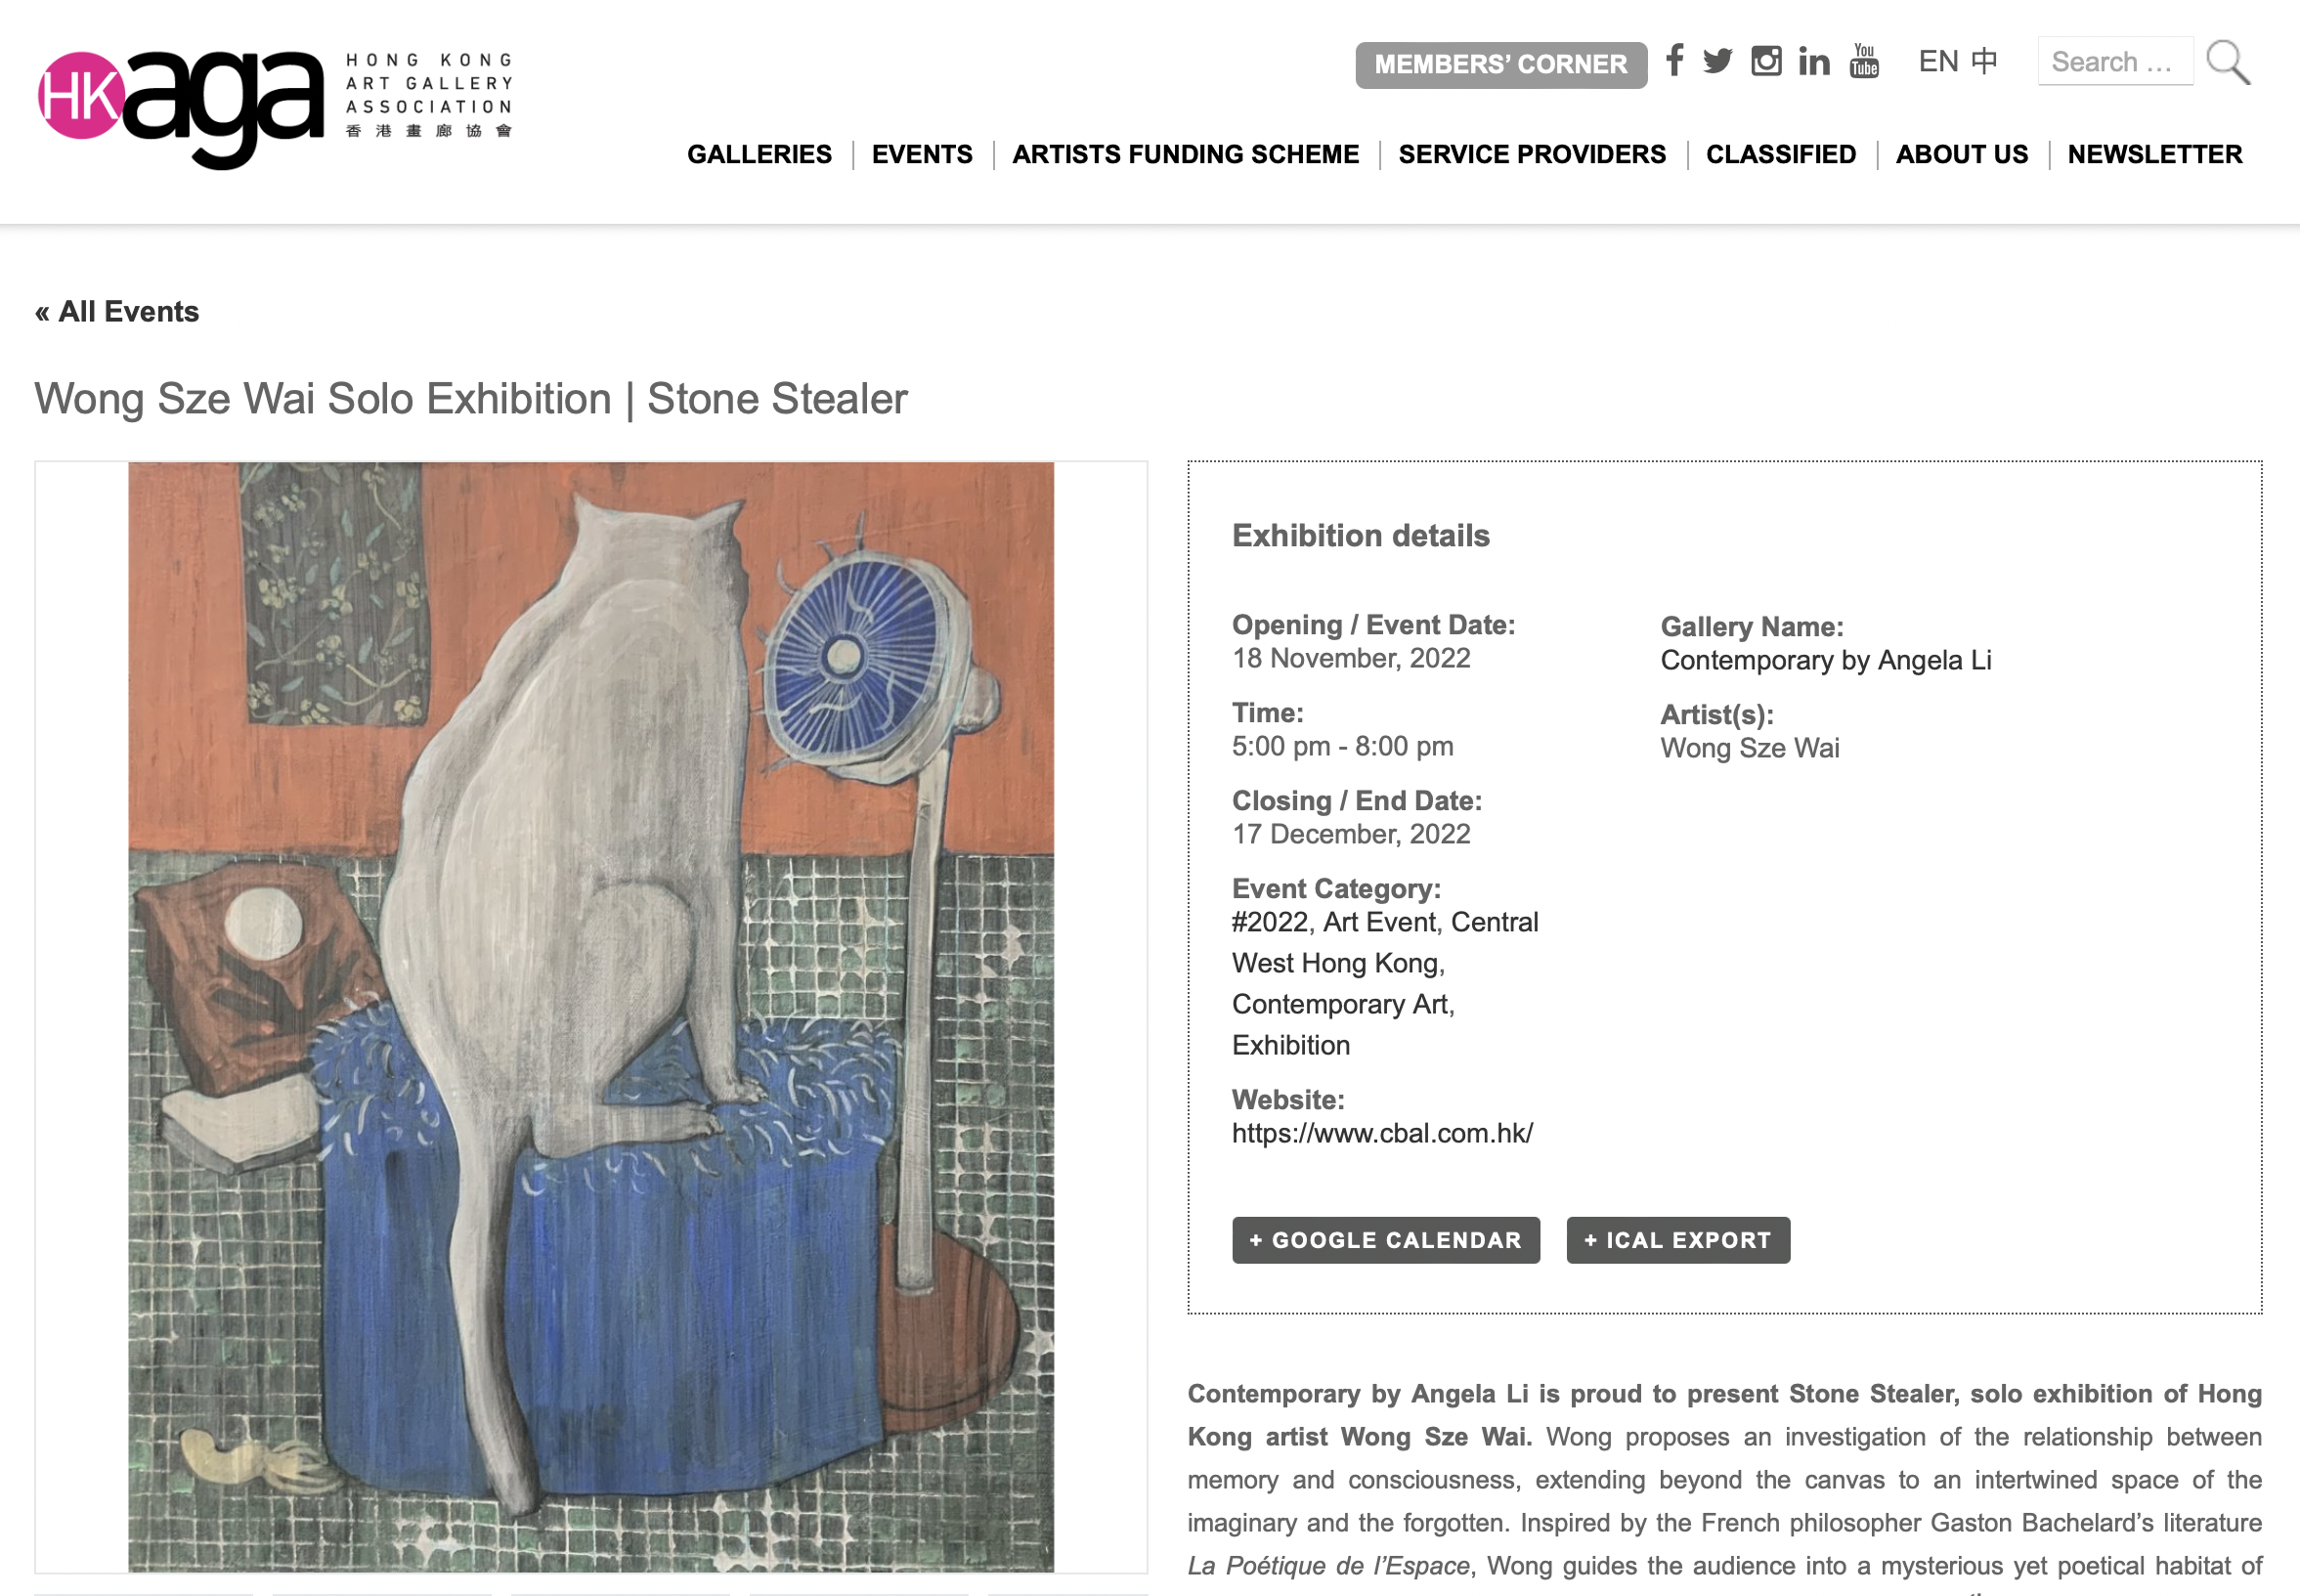 Wong Sze Wai Solo Exhibition: Stone Stealer | Hong Kong Art Gallery Association